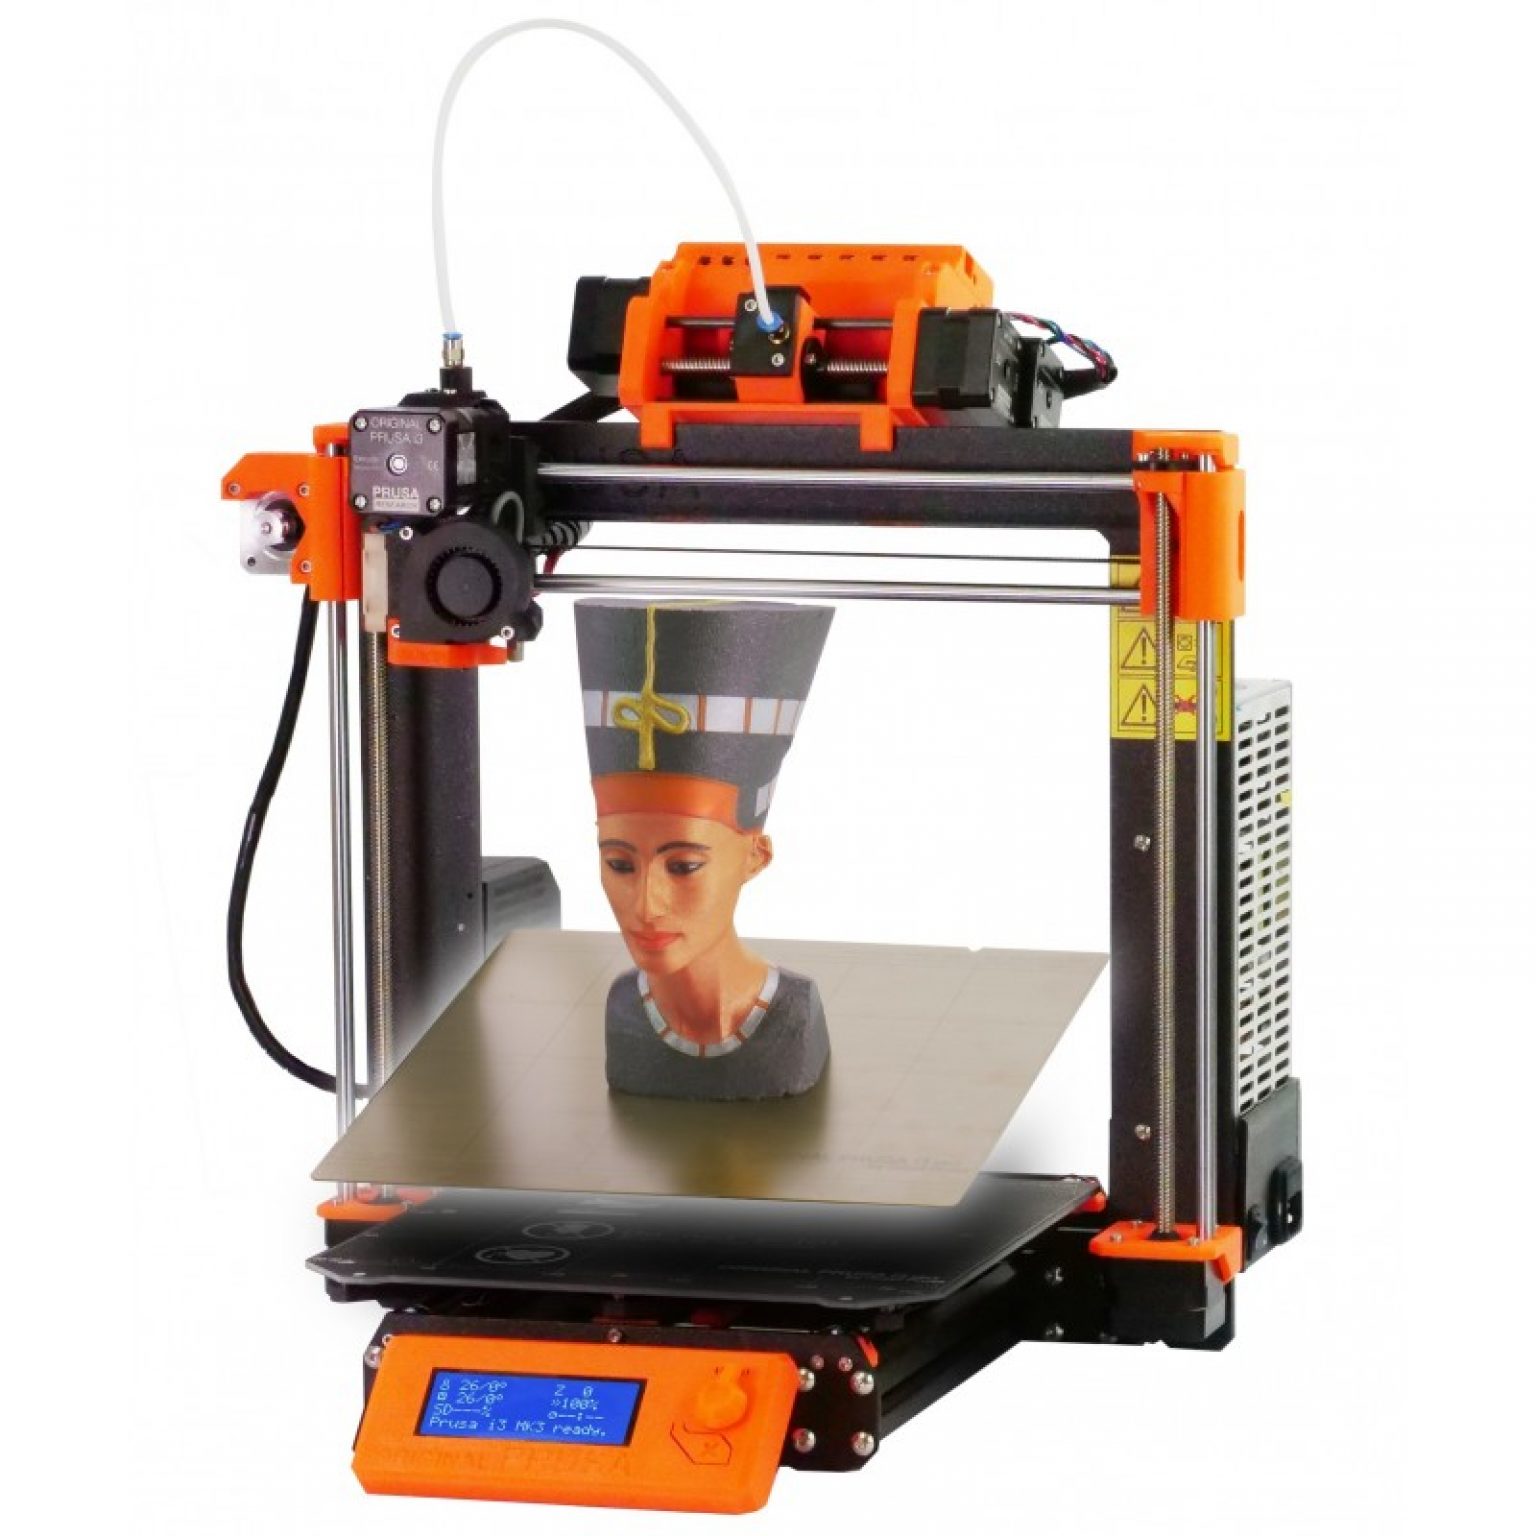 15 Best 3D Printers for hobbyists 2021 Pick 3D Printer